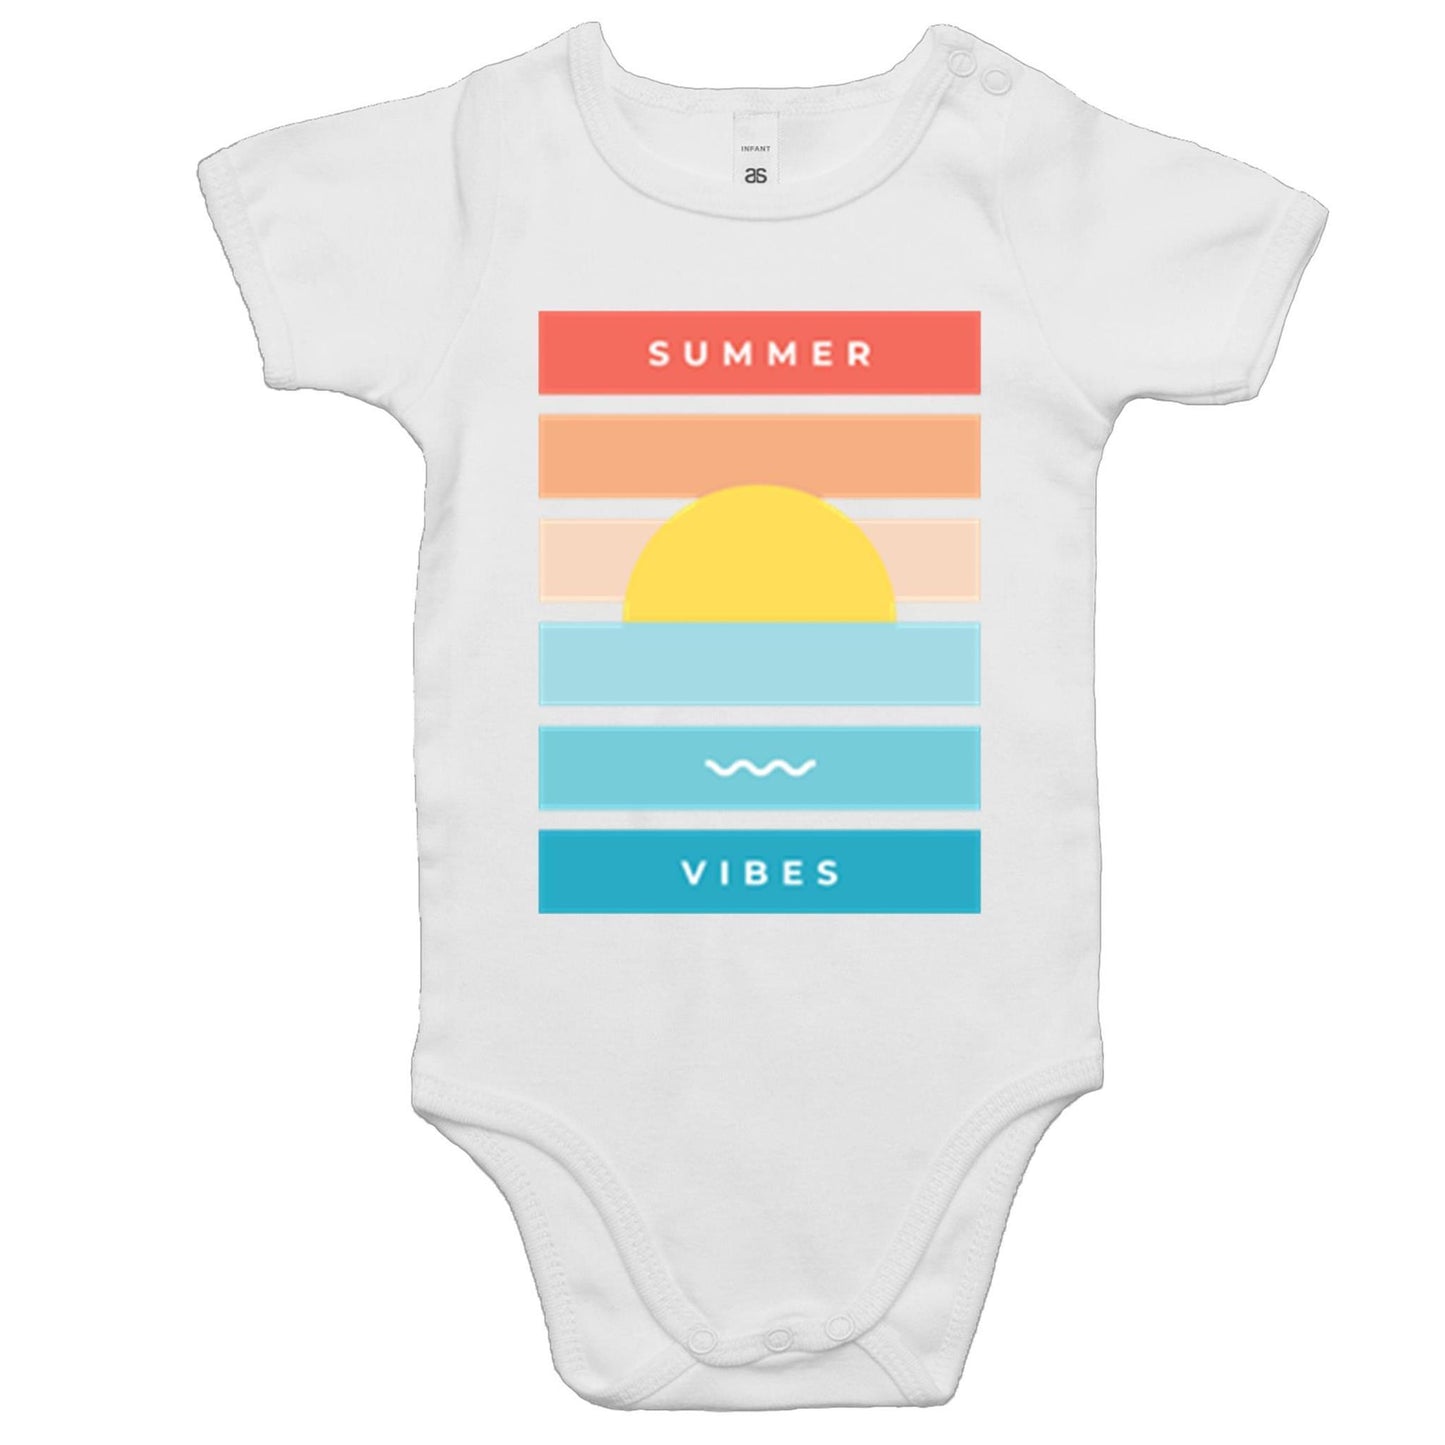 Summer Vibes - Baby Bodysuit White Baby Bodysuit kids Summer